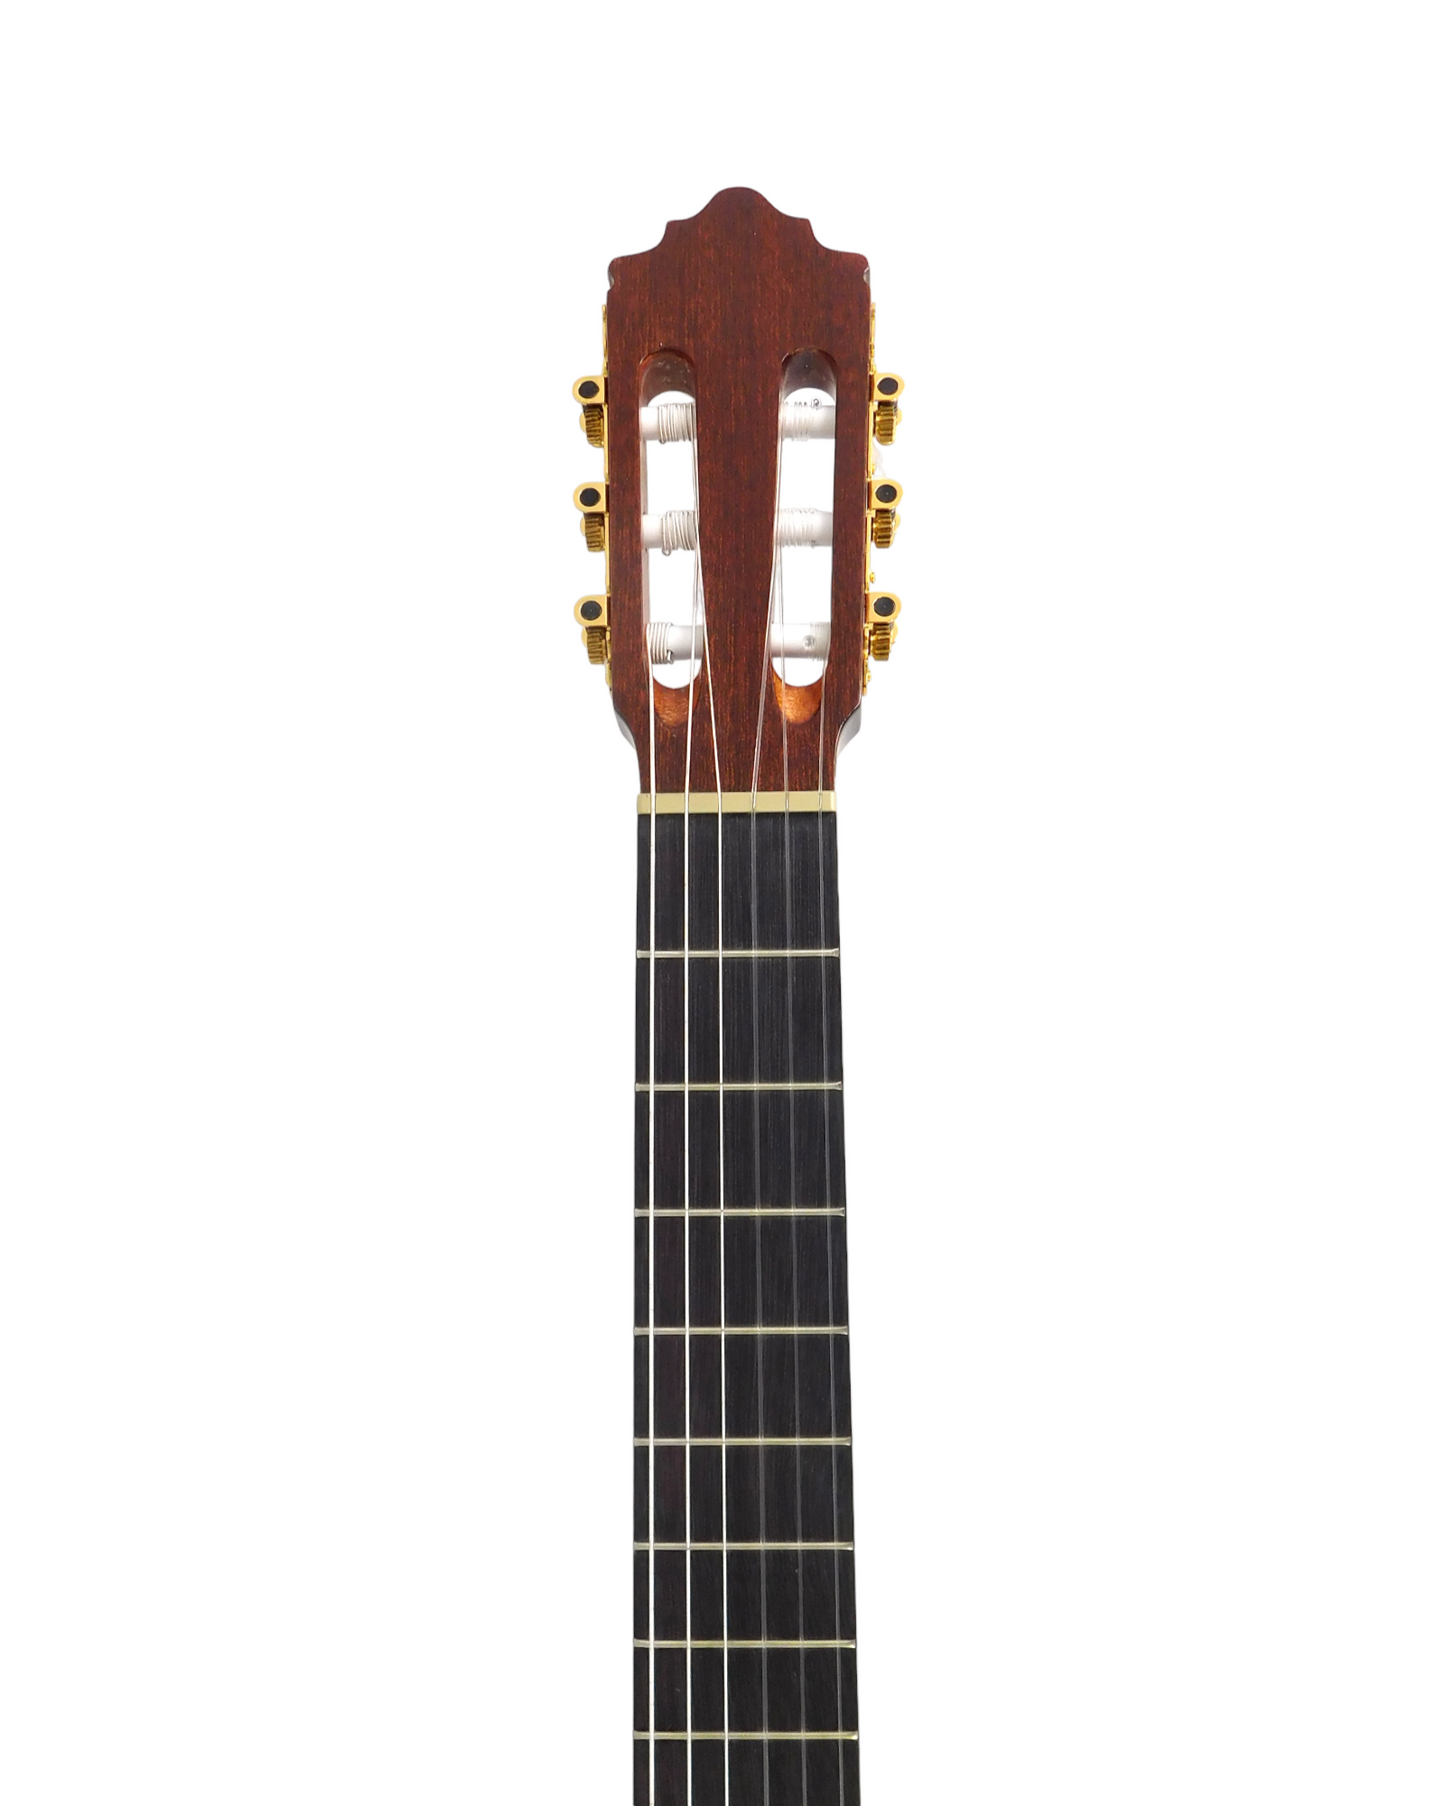 Miguel Rosales Solid Canadian Cedar Cutaway Built-In Belcat Pickup/Tuner Classical Guitar - Natural HS10CEQN